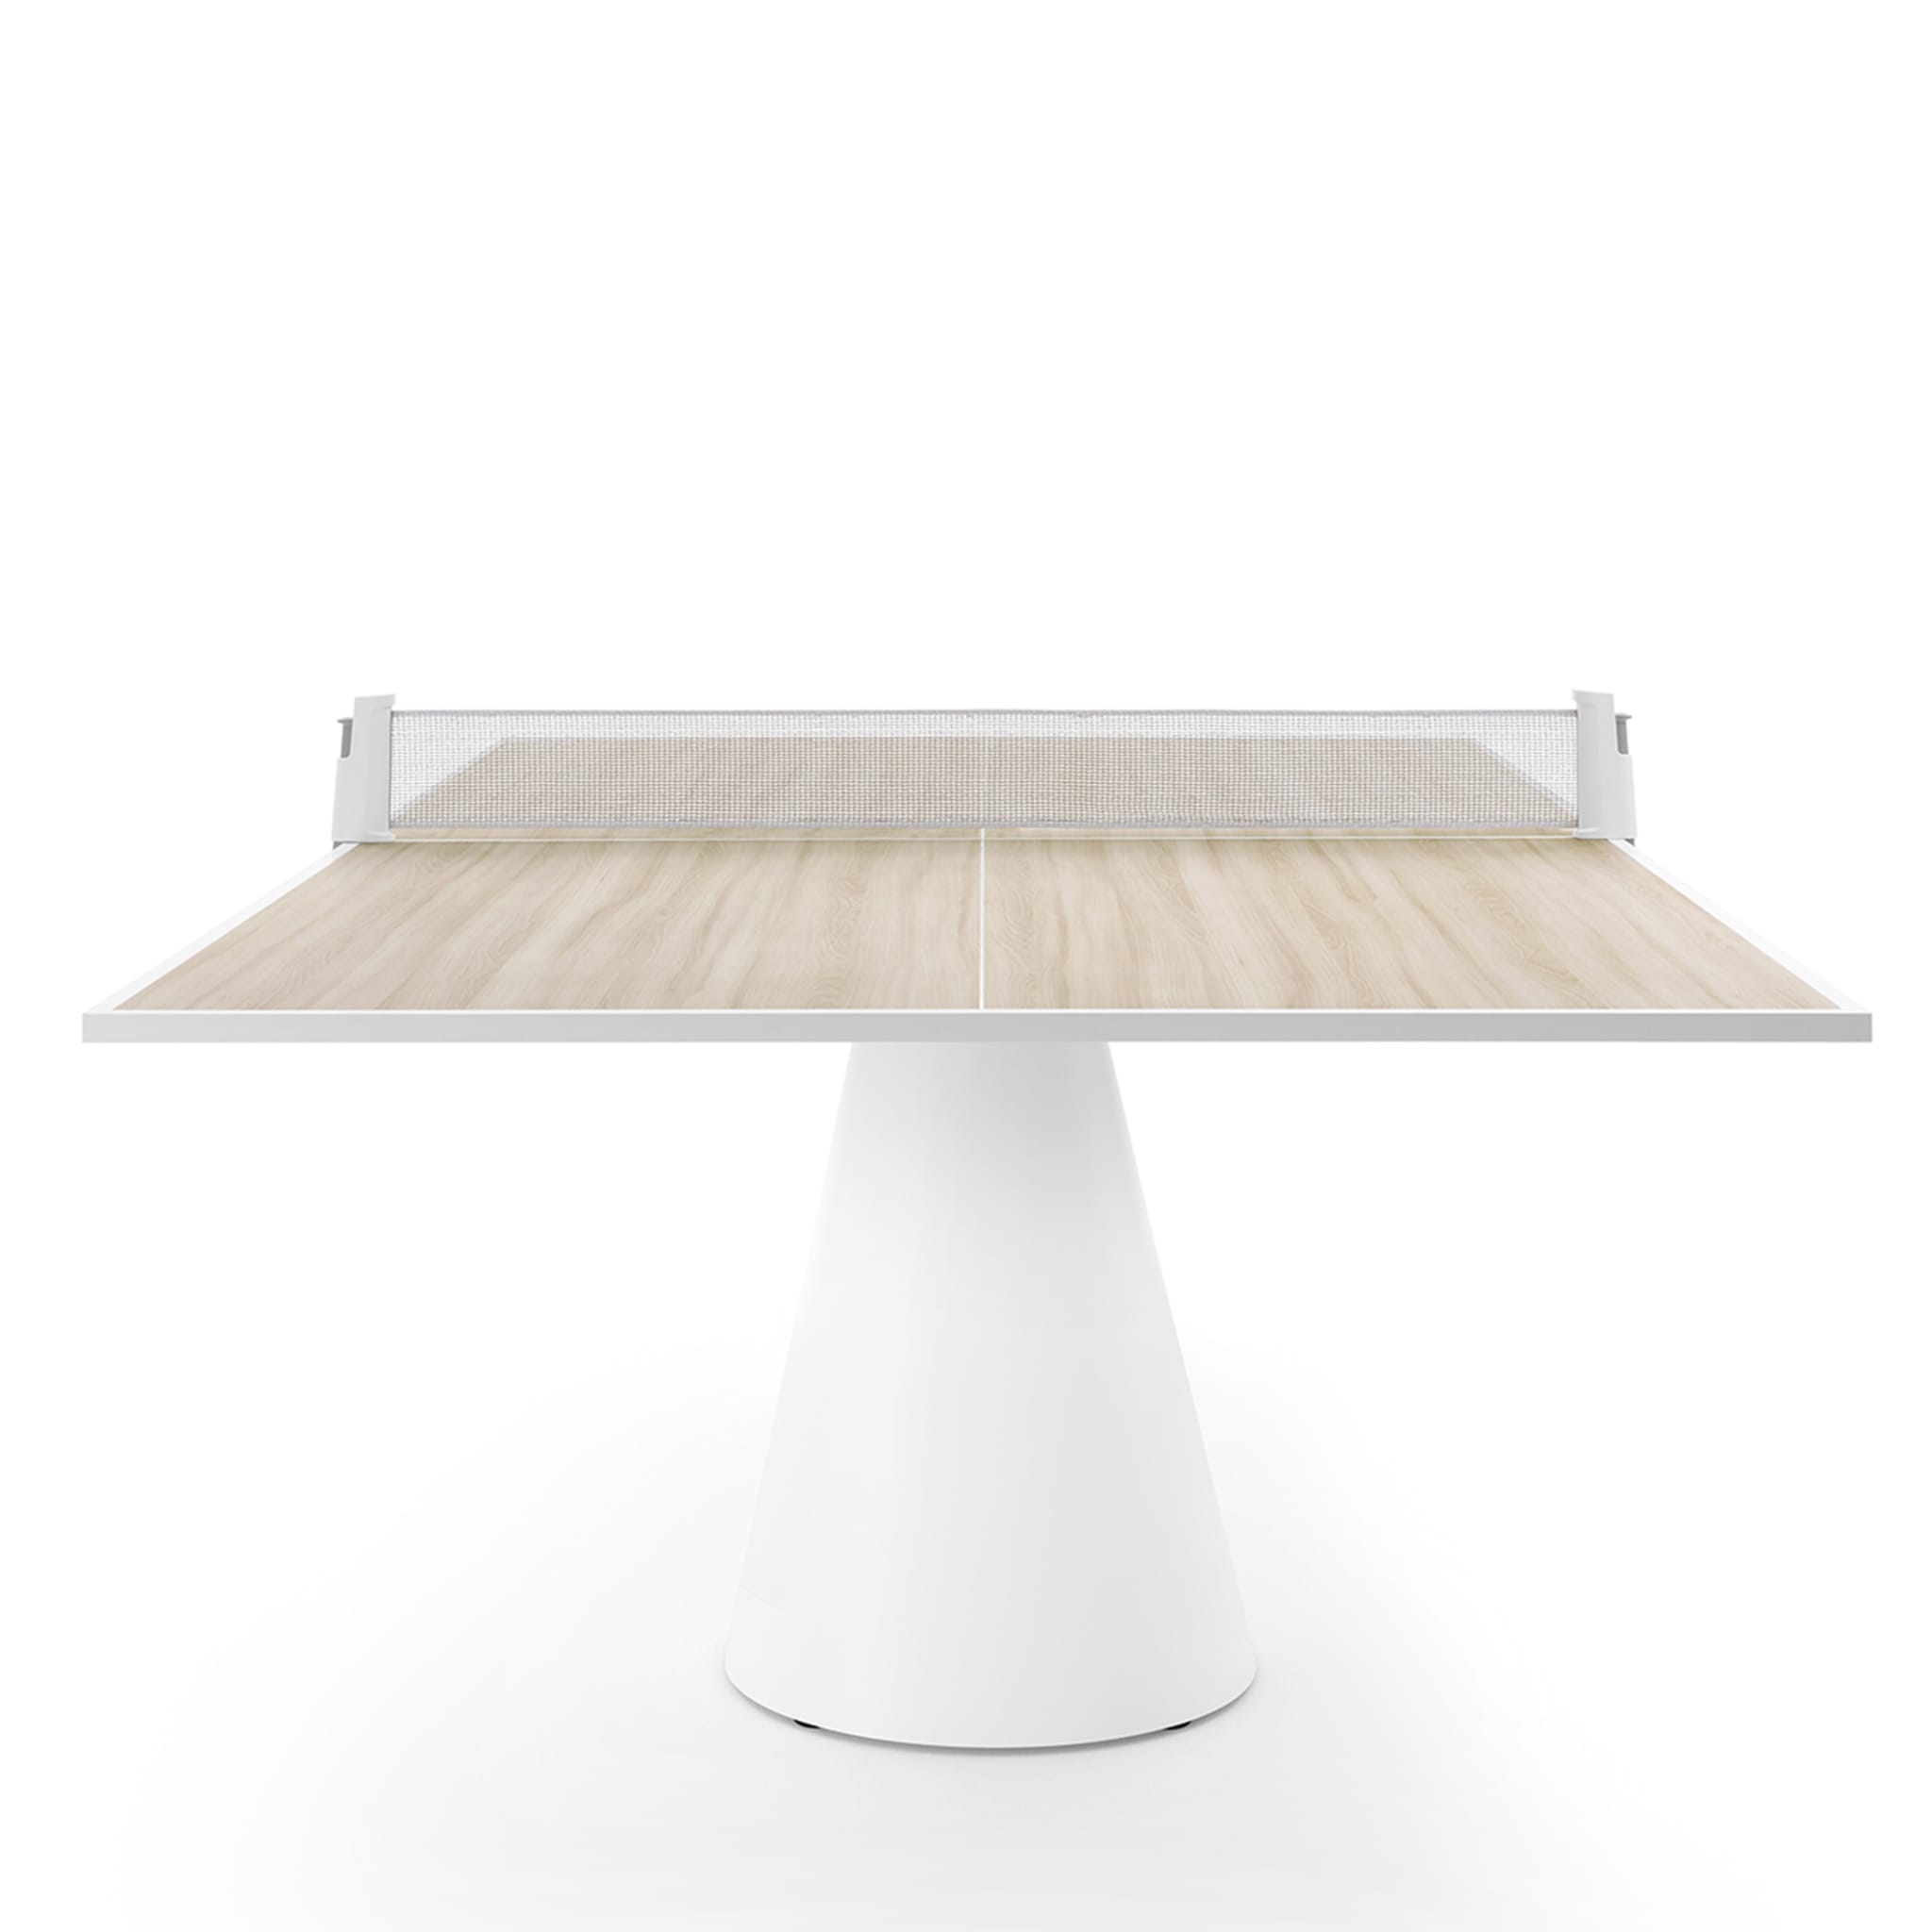 Dada Ping Pong Table by Basaglia + Rota Nodari - Alternative view 2